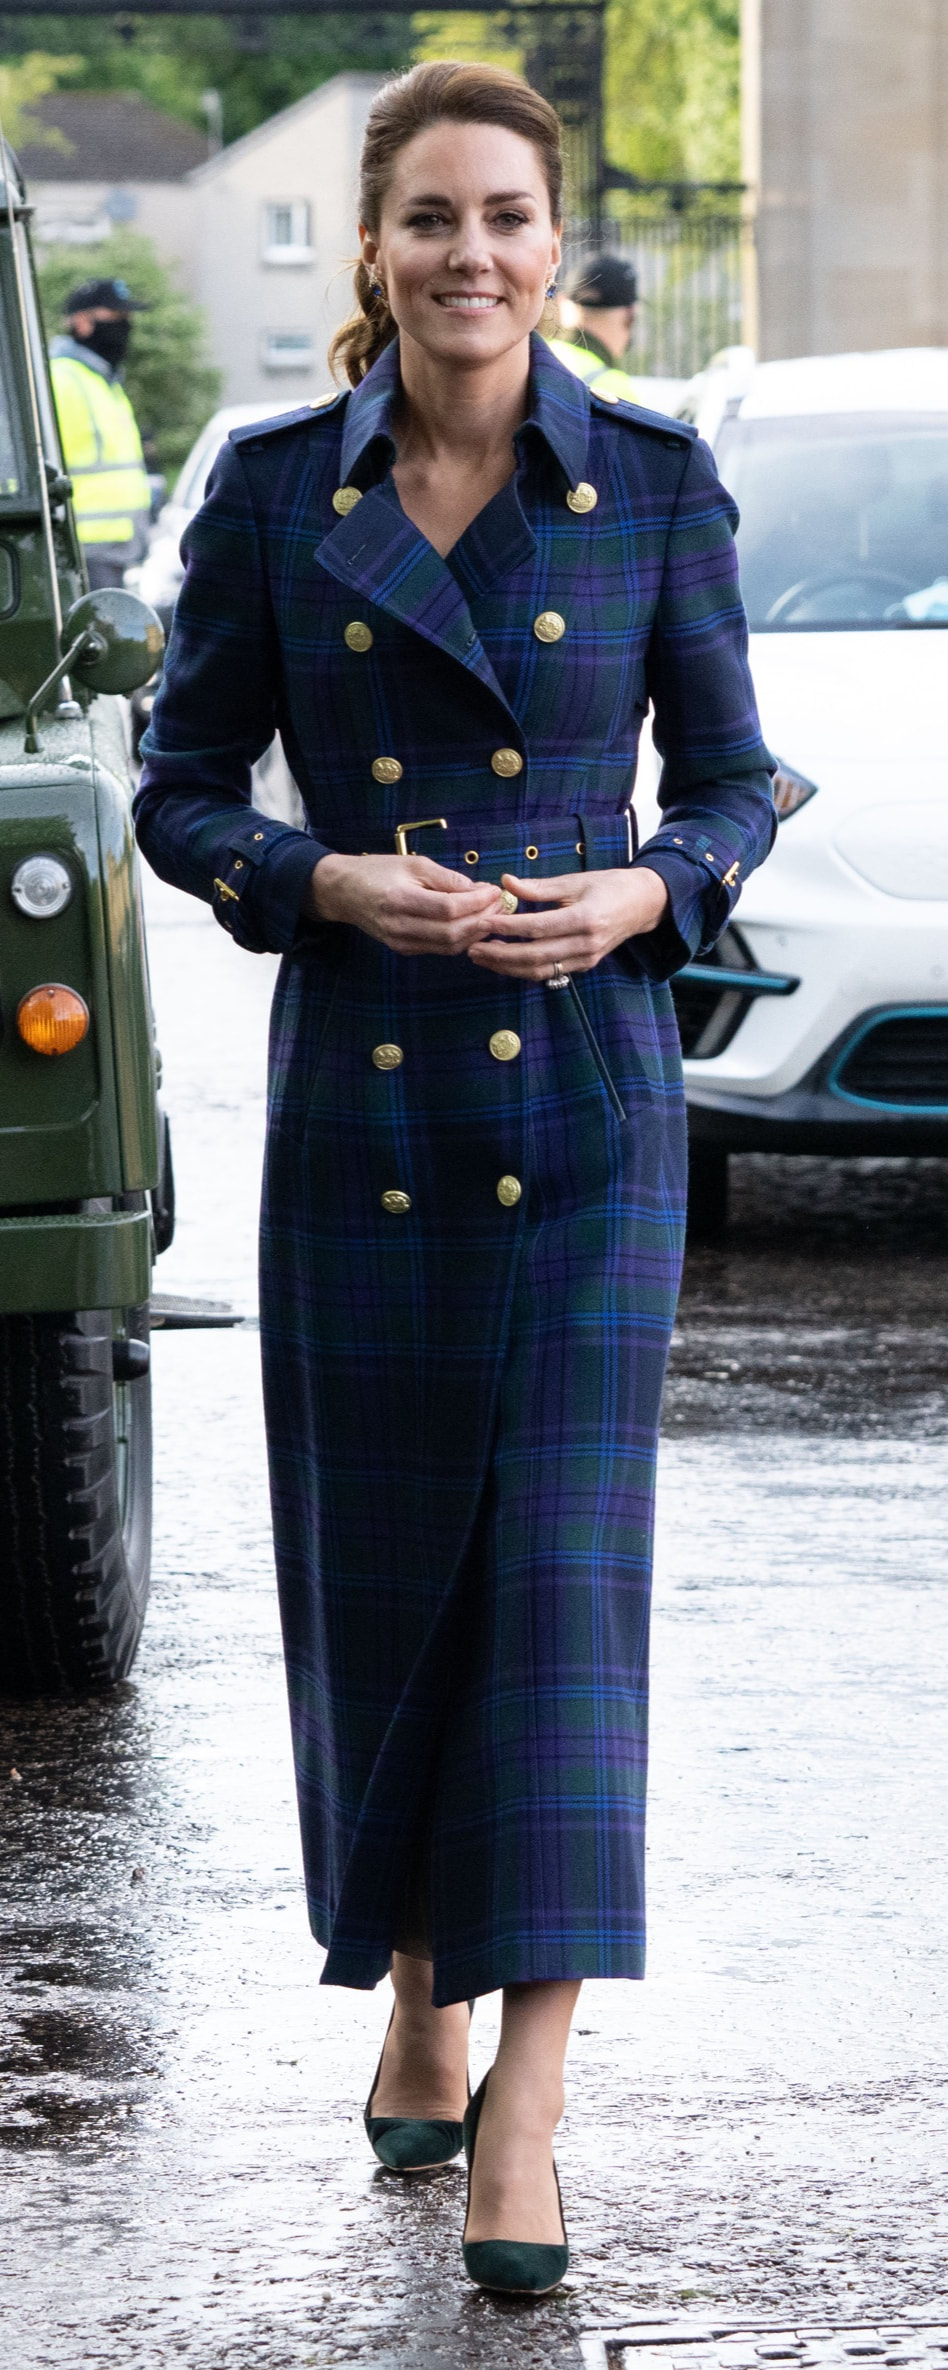 Holland Cooper Marlborough Tartan Trench Coat as seen on Kate Middleton, The Duchess of Cambridge.